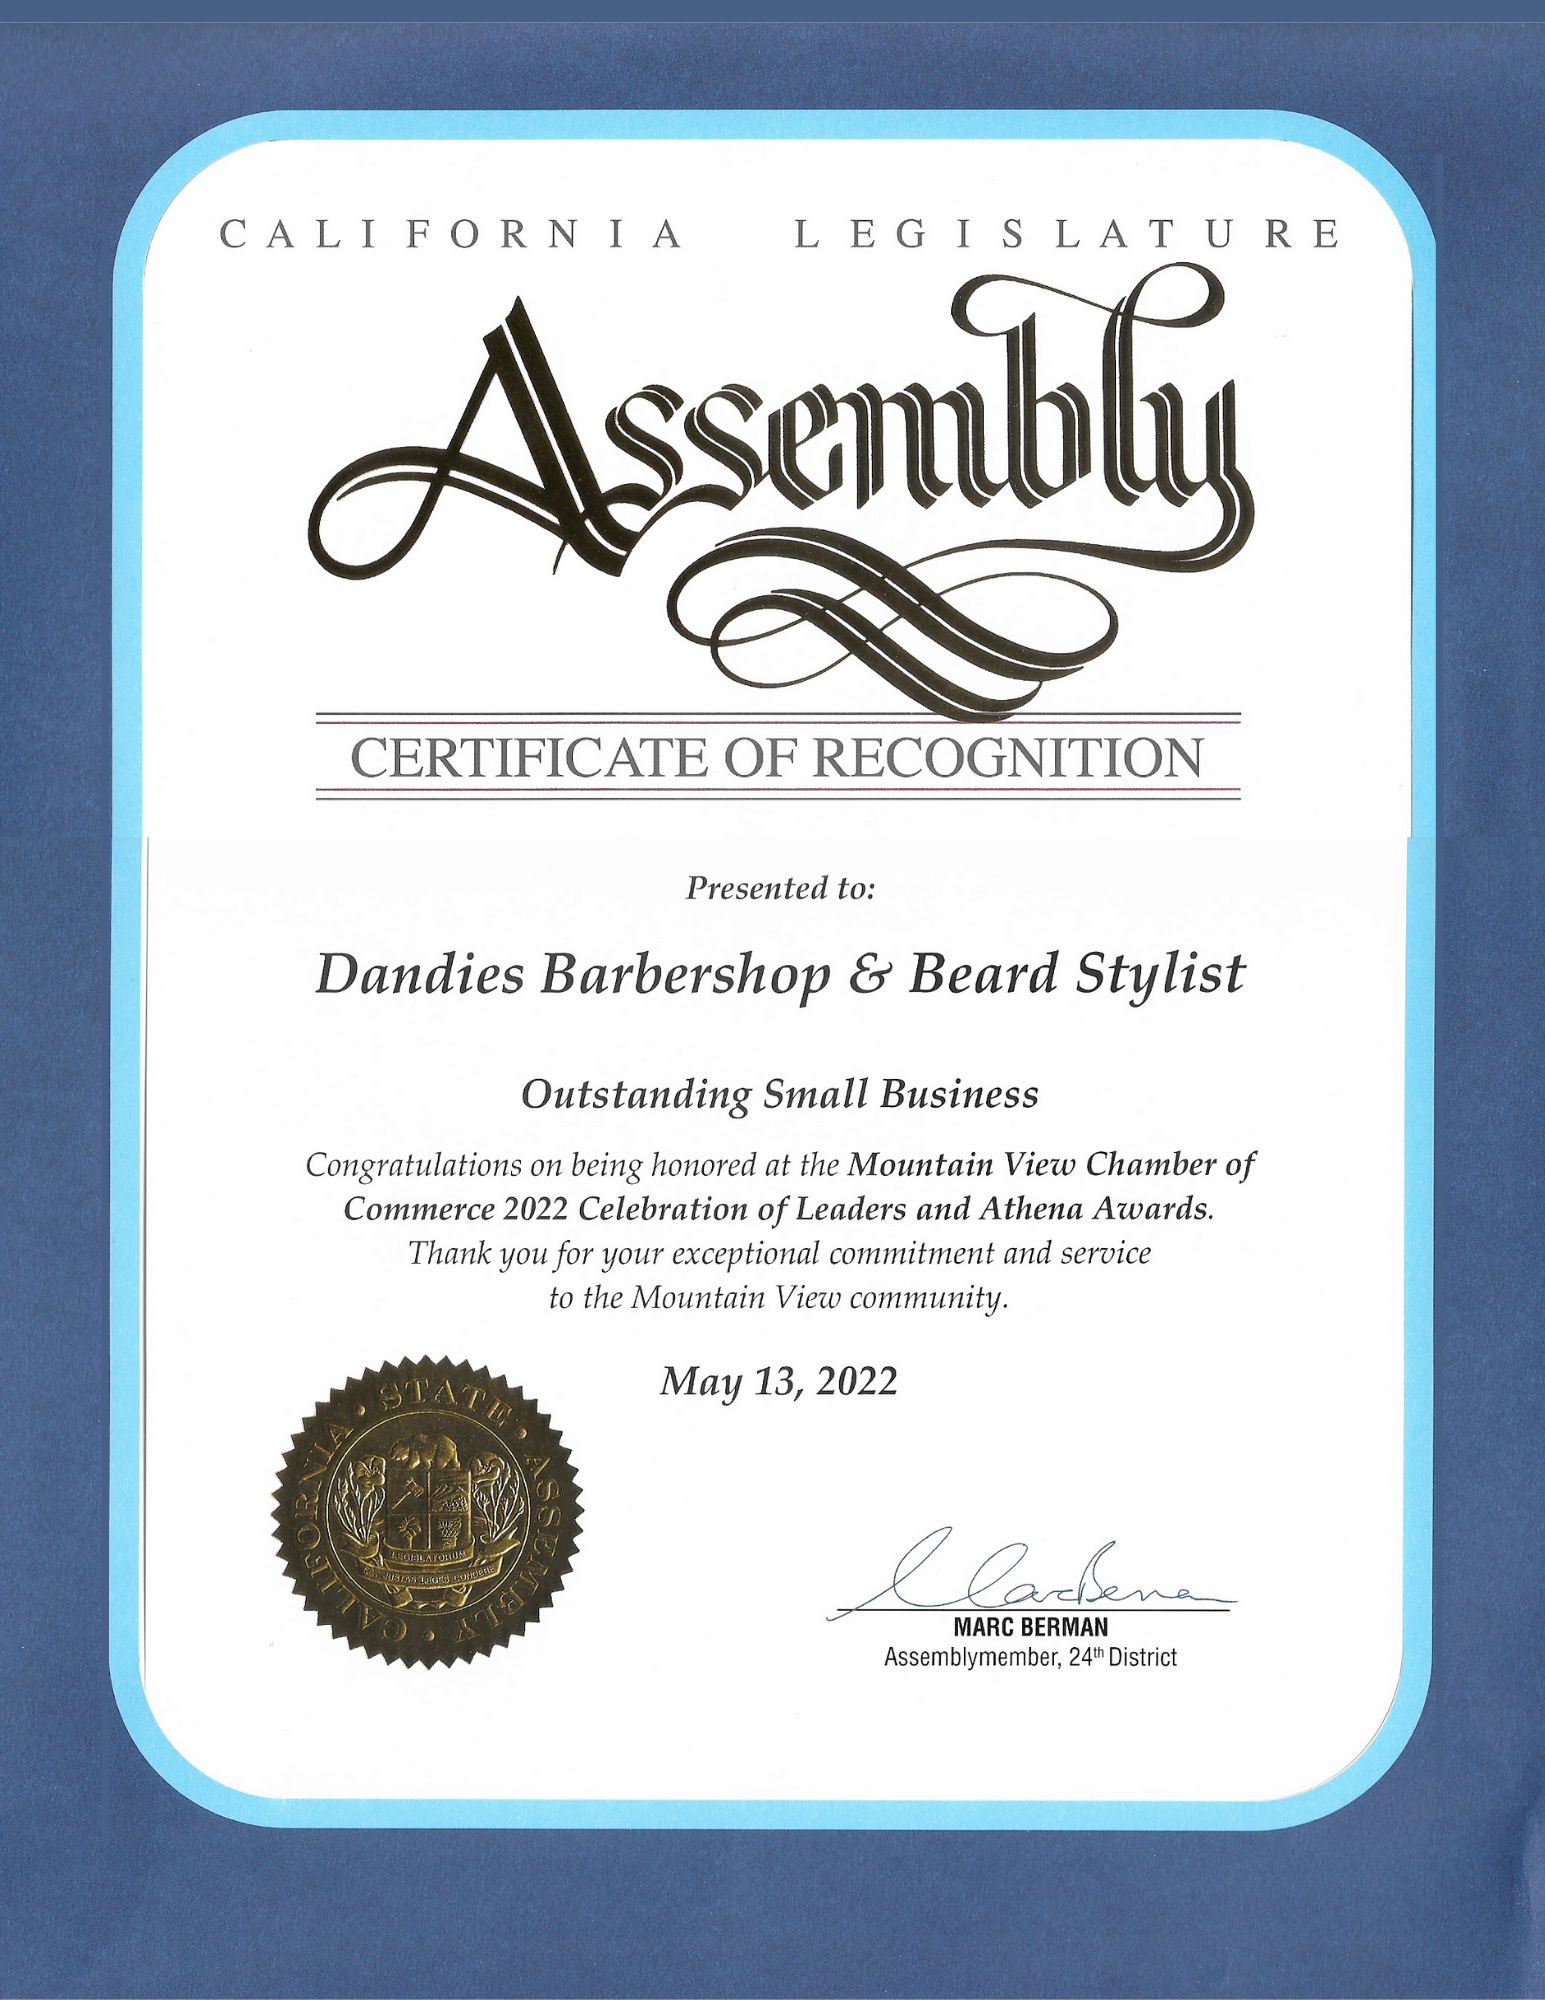 Outstanding Small Business: Dandies Barbershop & Beard Stylist Mountain View, CA 94041